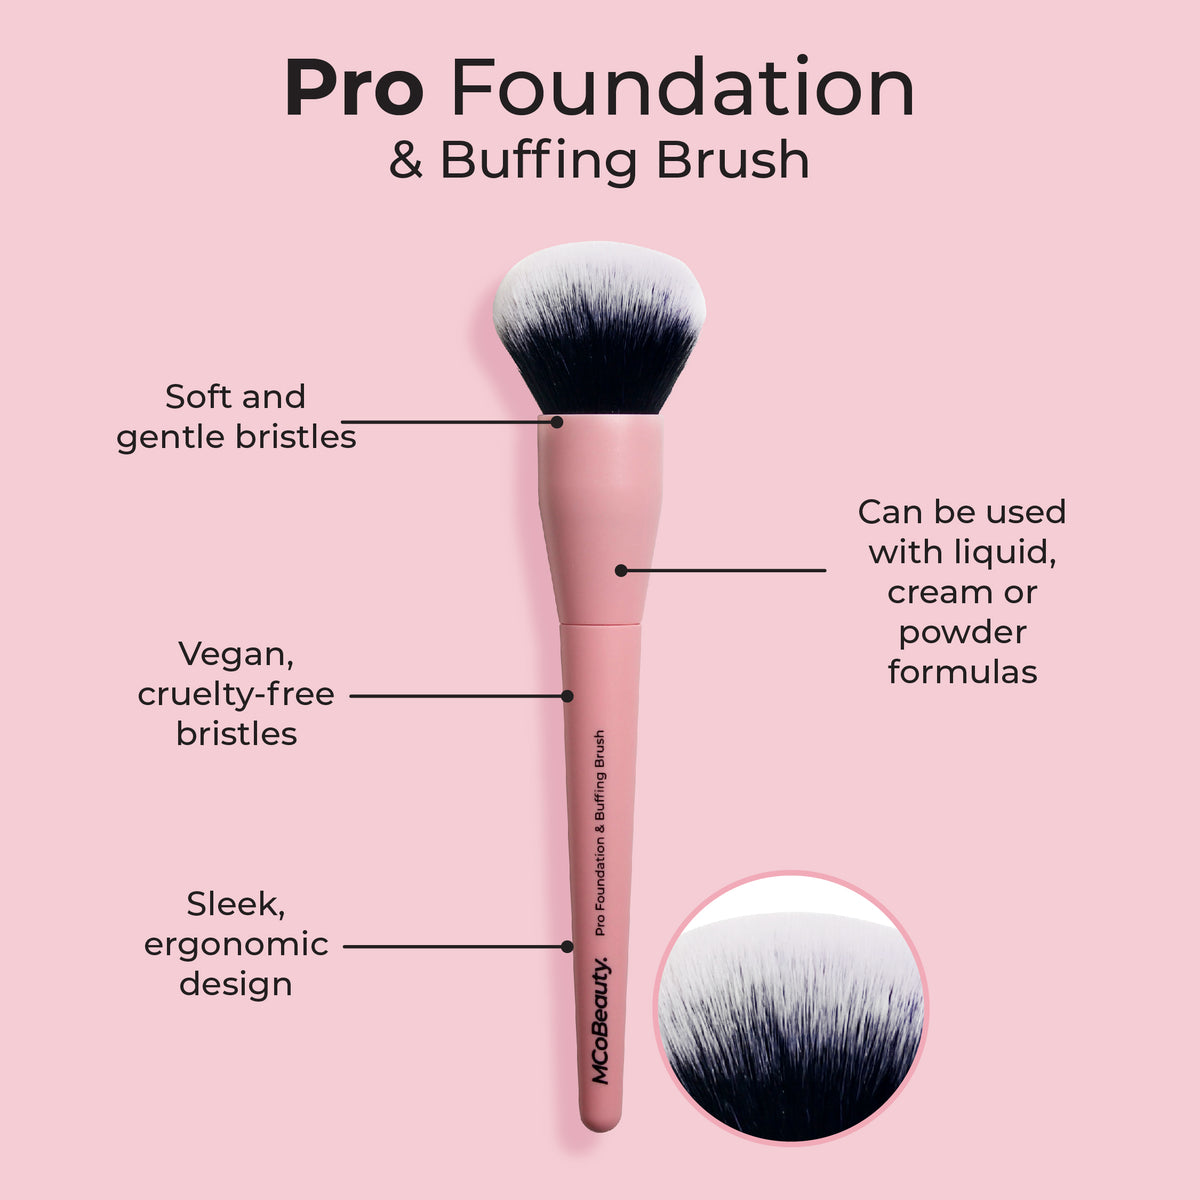 Pro Foundation Buffing Brush Mcobeauty